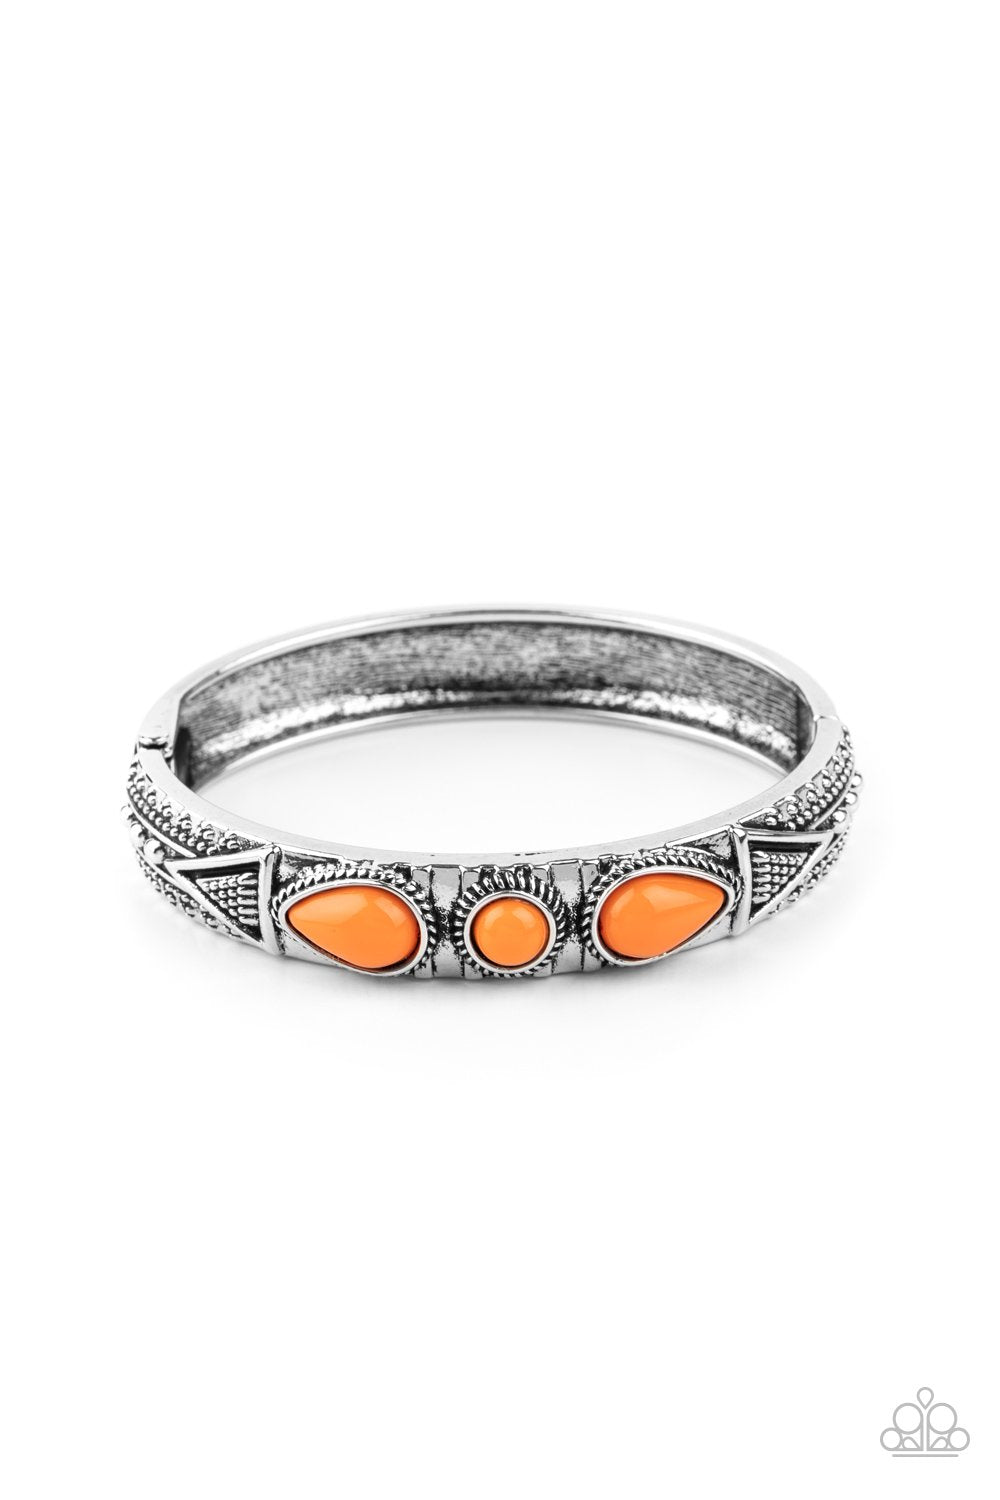 Radiant Ruins - Orange Bracelet freeshipping - JewLz4u Gemstone Gallery